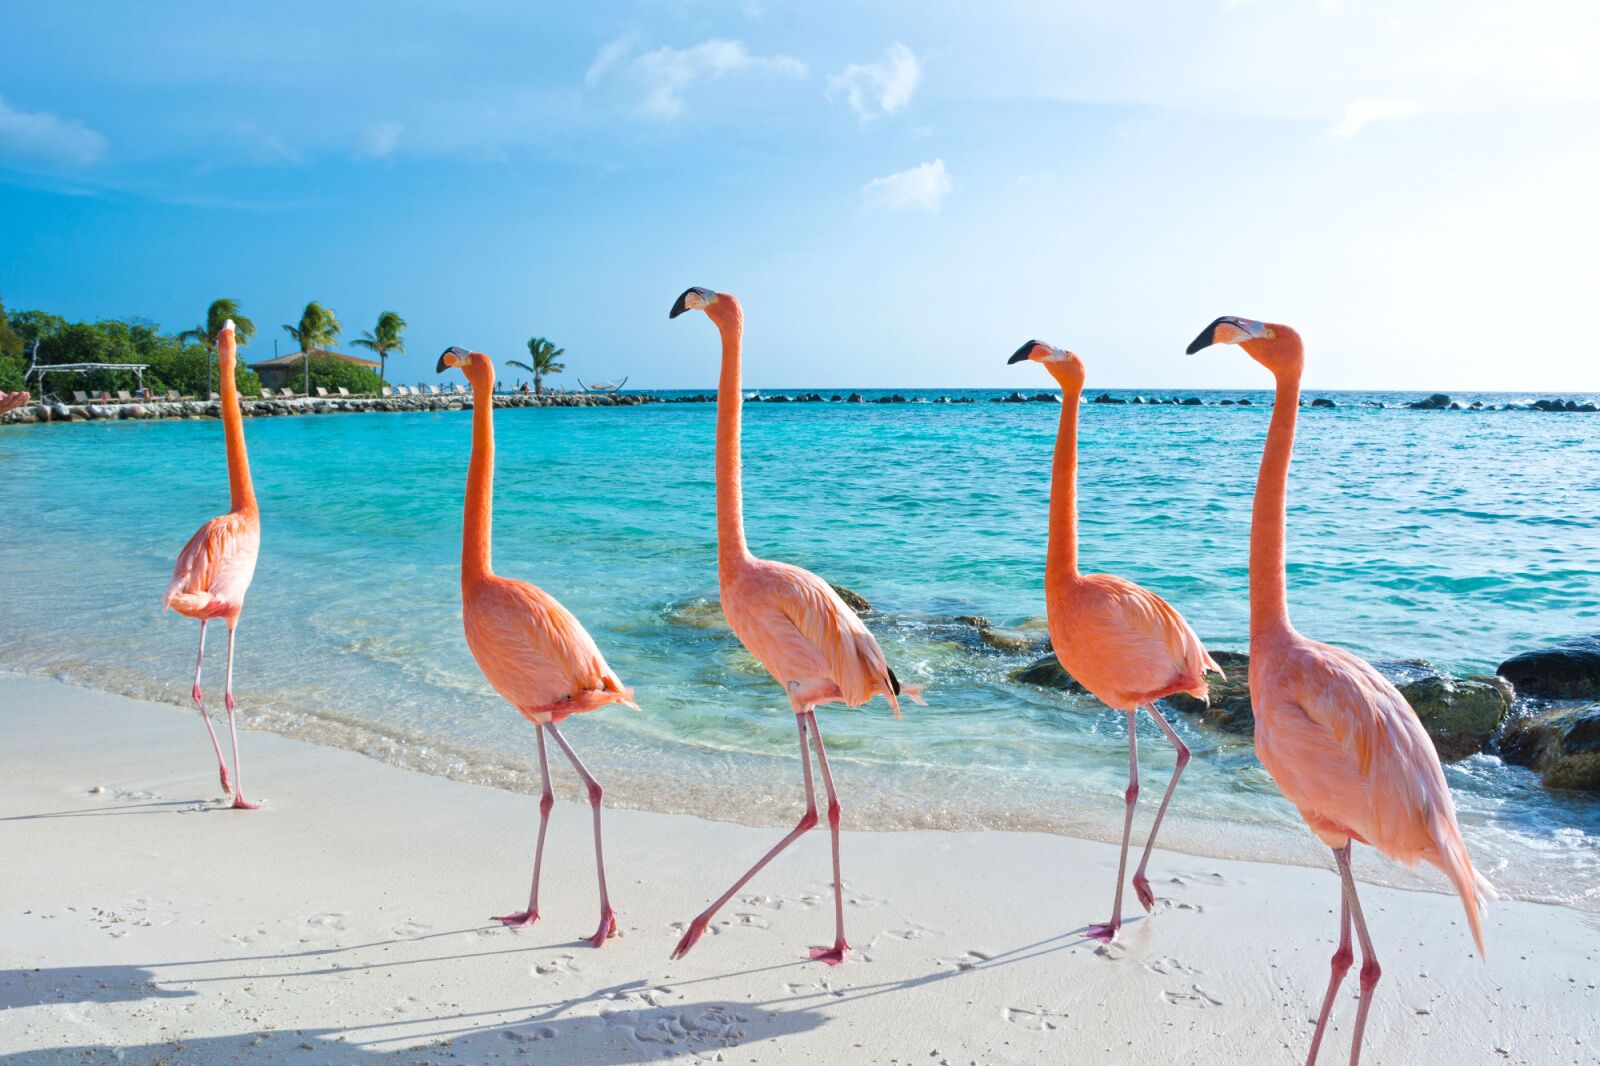 cheap flights to the caribbean - flamingos in aruba